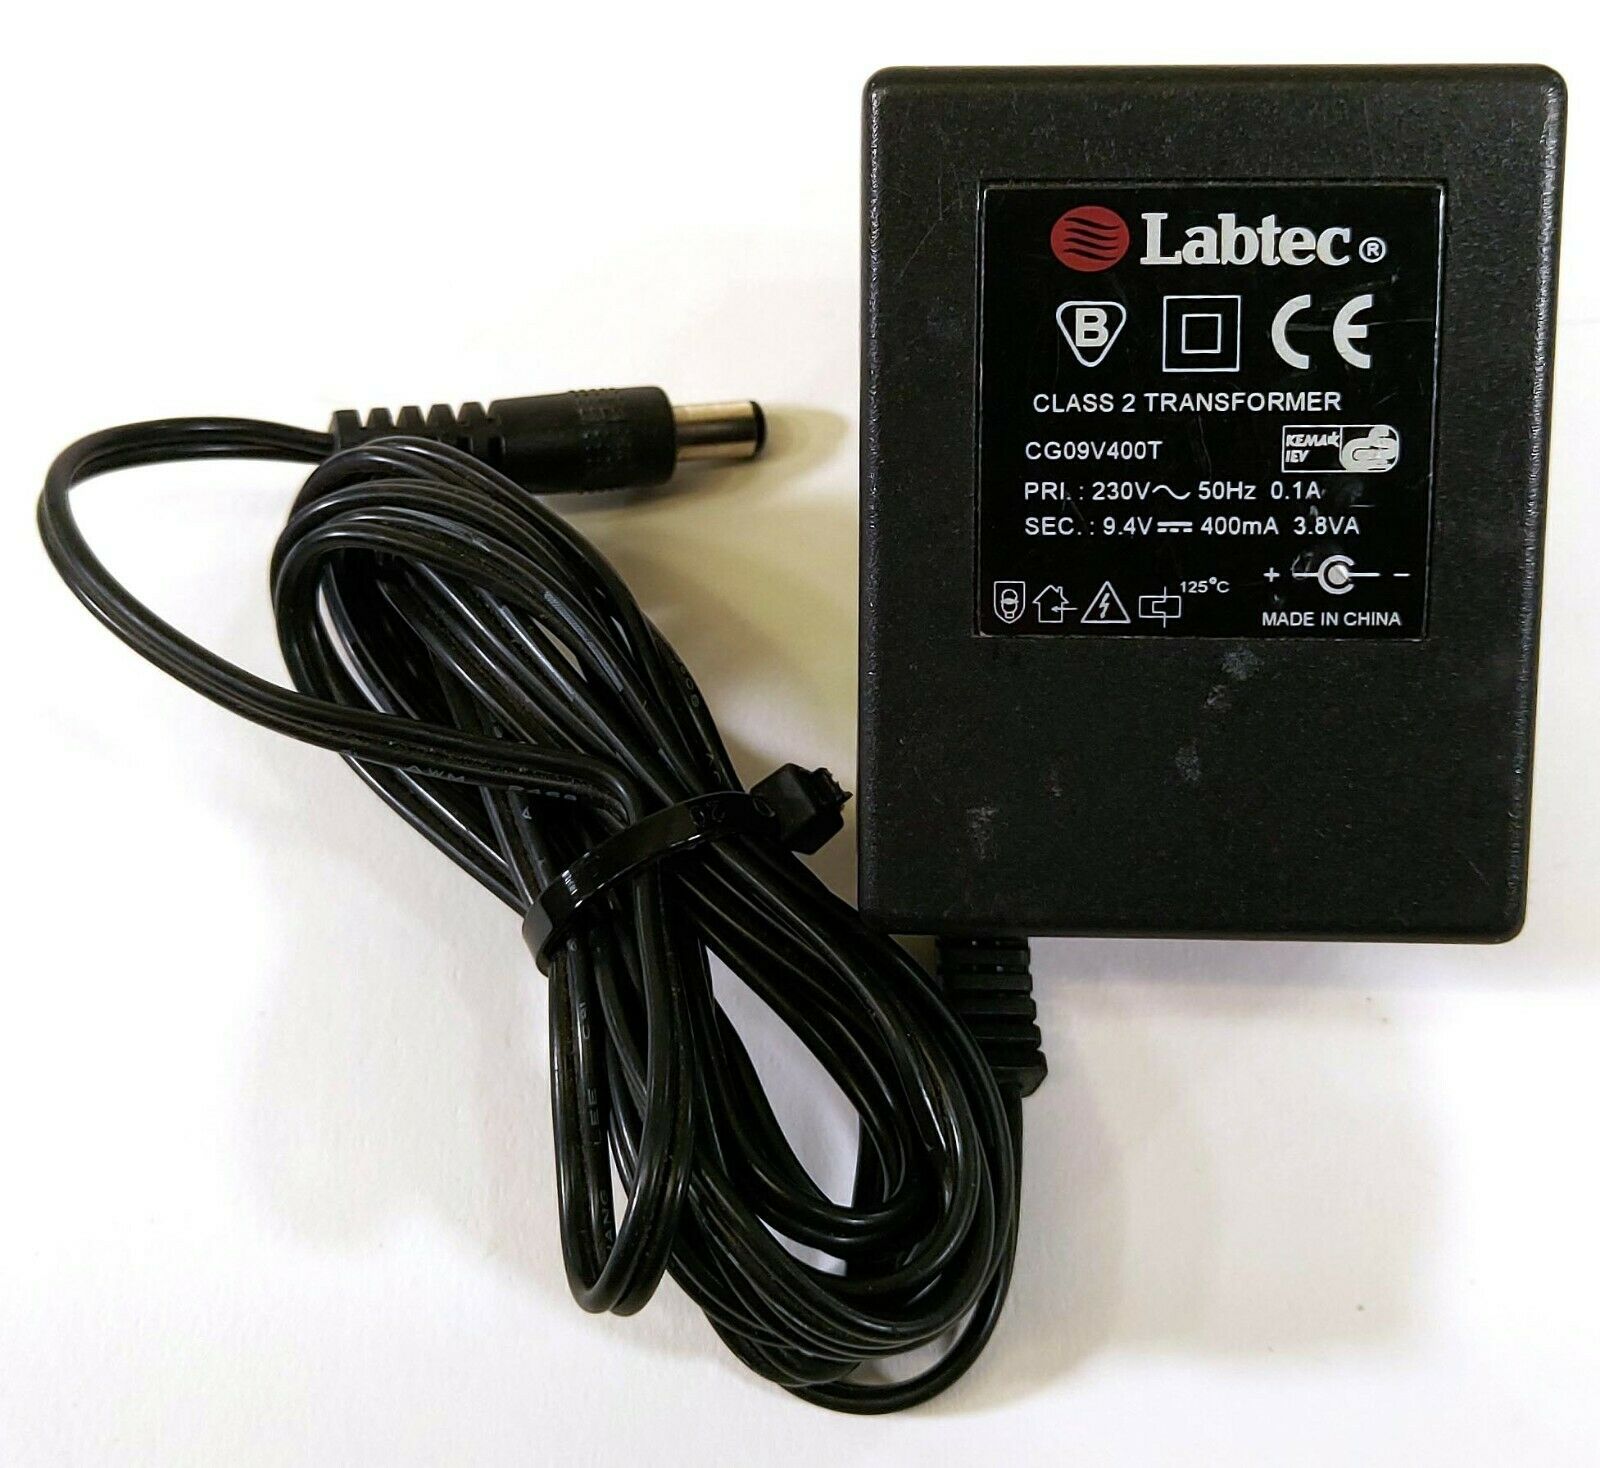 Labtec CG09V400T Transformer AC/DC Adapter 9.4V 400mA Original Charger D437 Output Current: 400